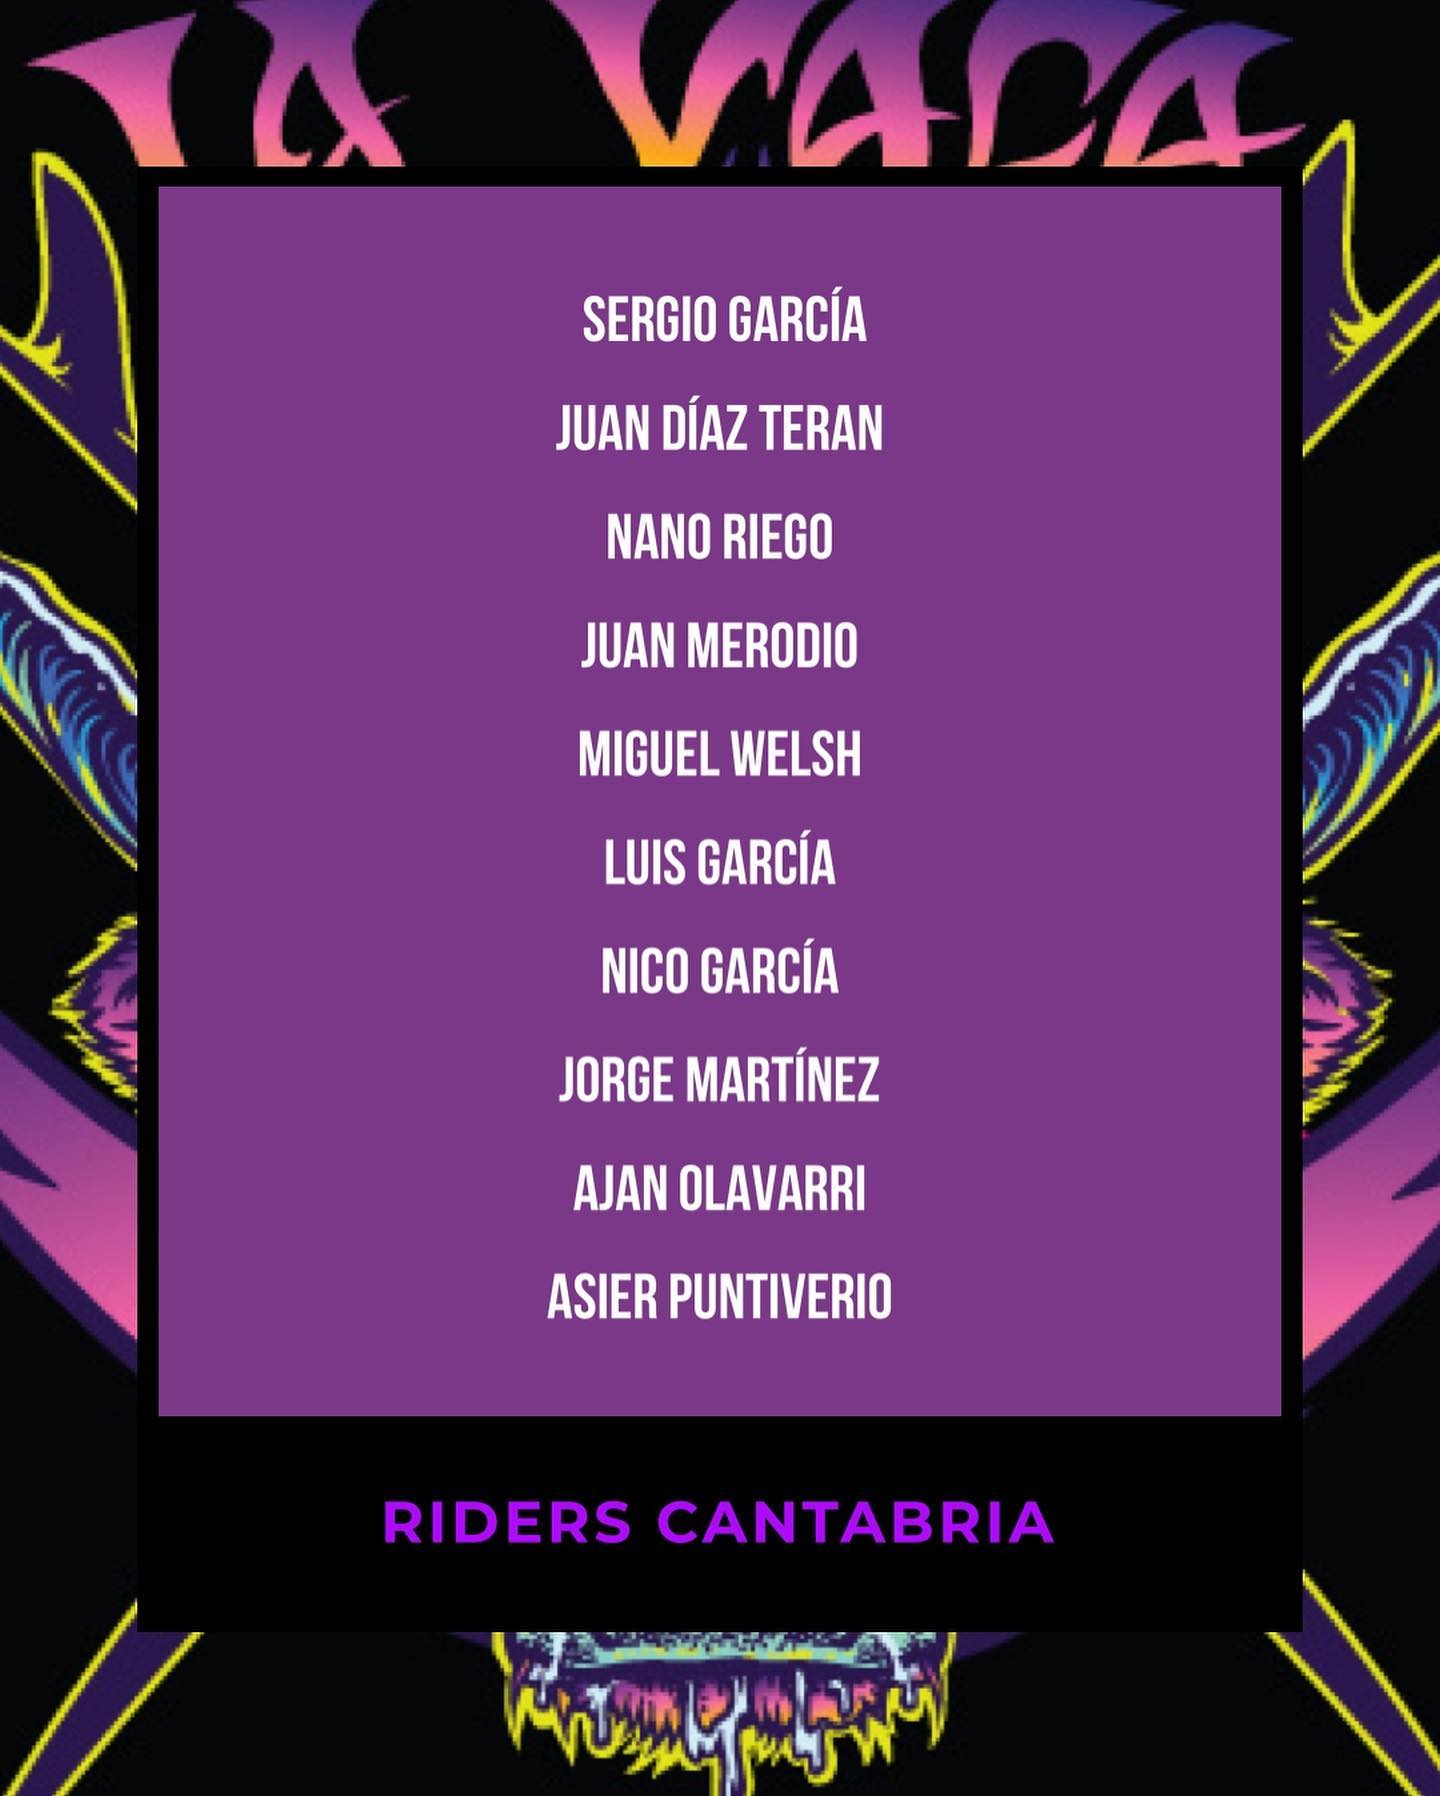 Riders cantabros